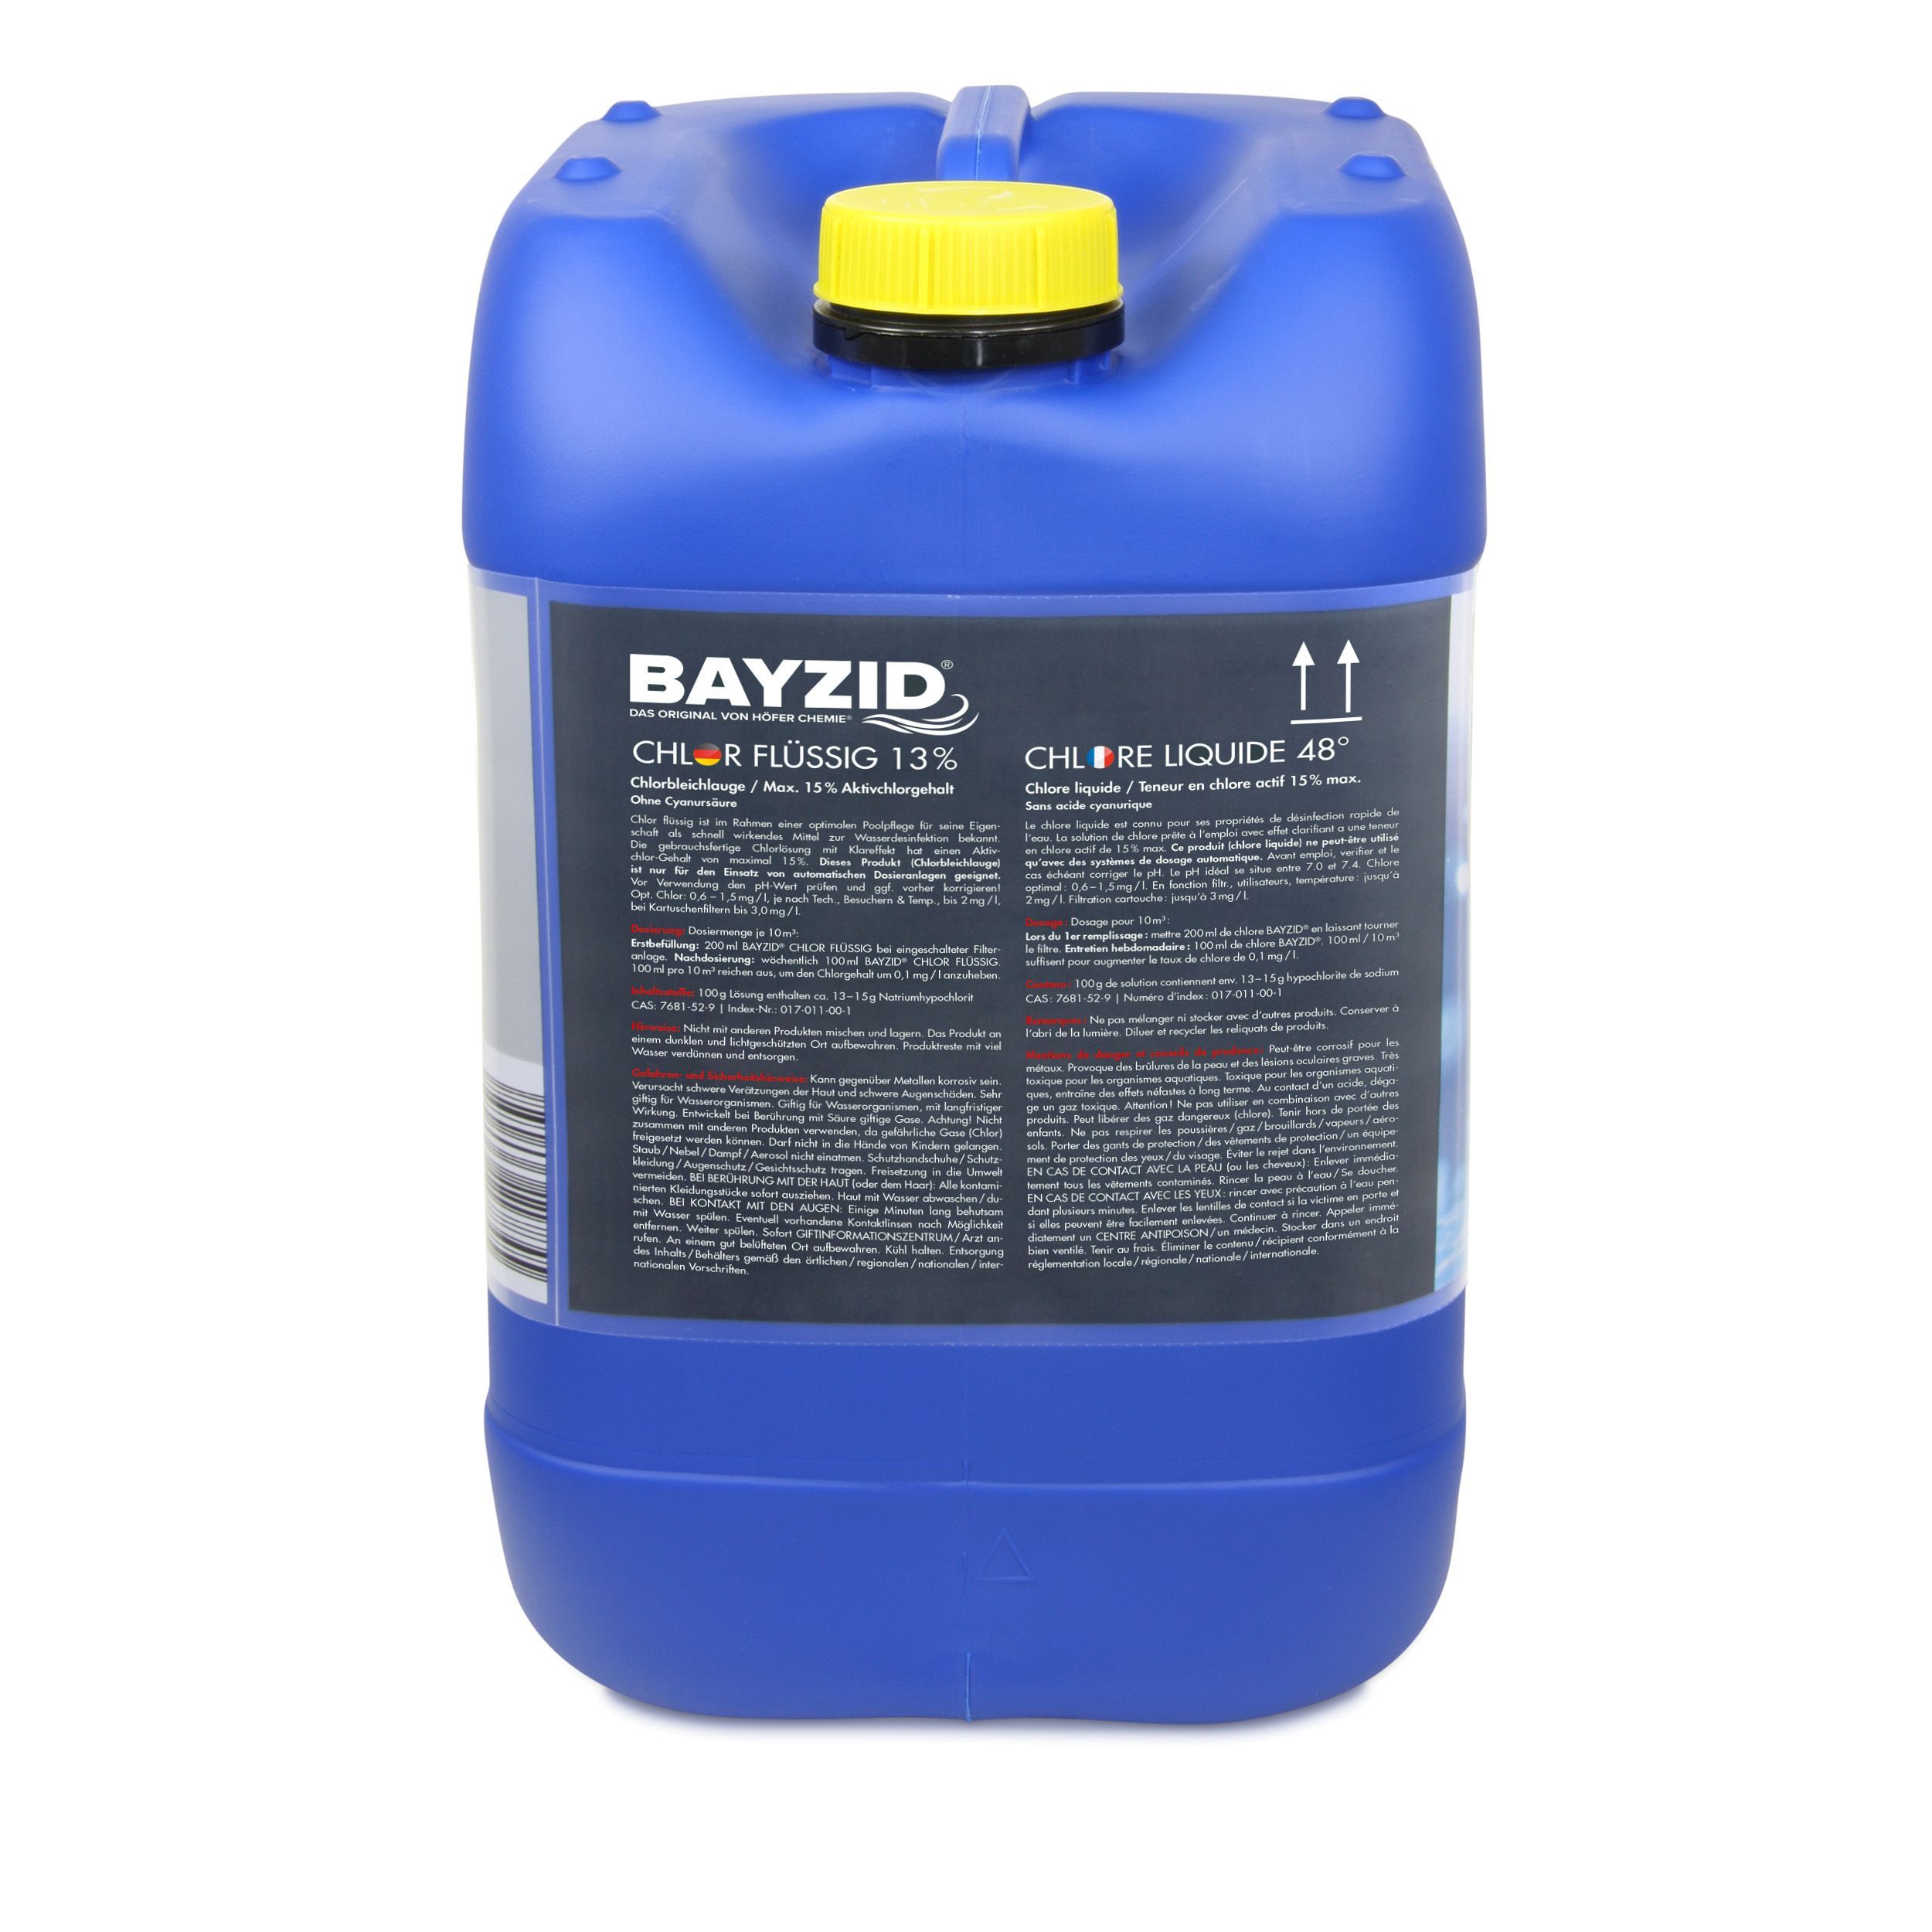 25 kg BAYZID® Chlore 13% liquide